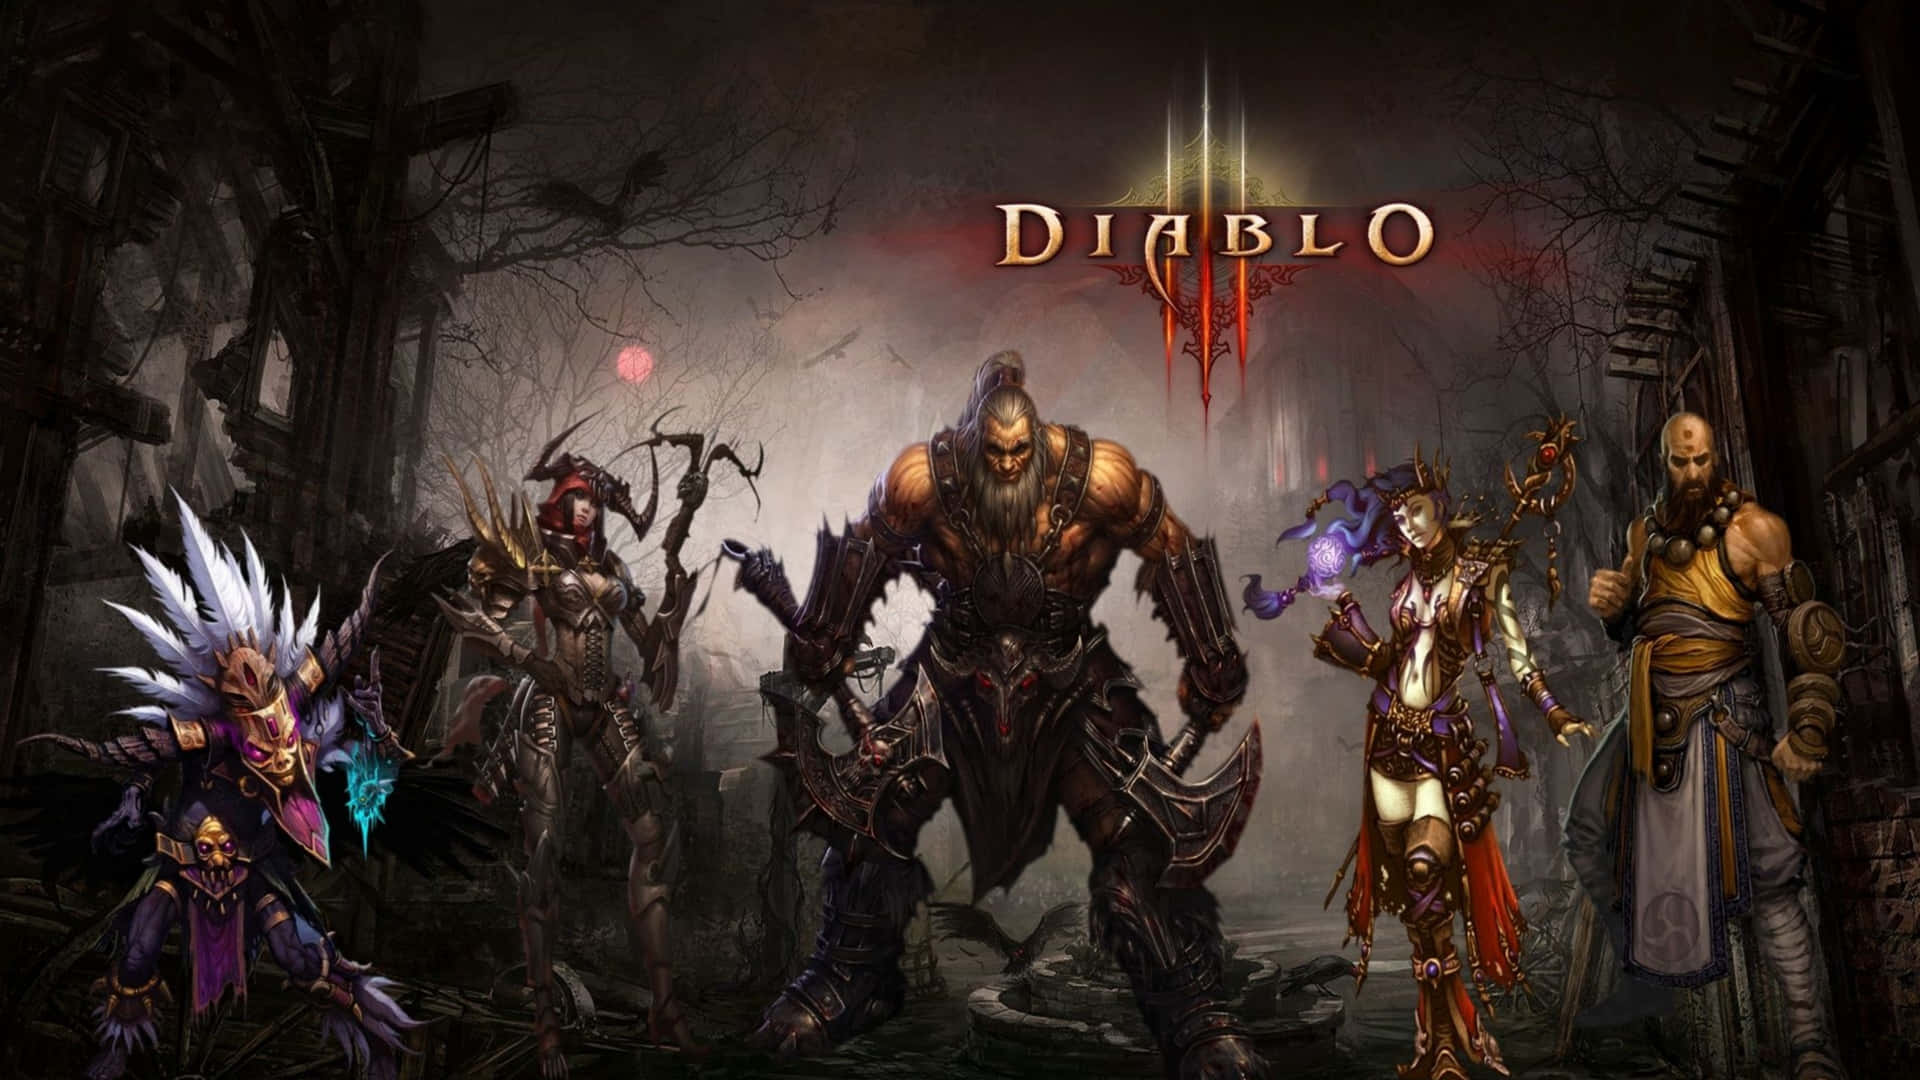 Diablo3 - Fondos De Pantalla. Fondo de pantalla